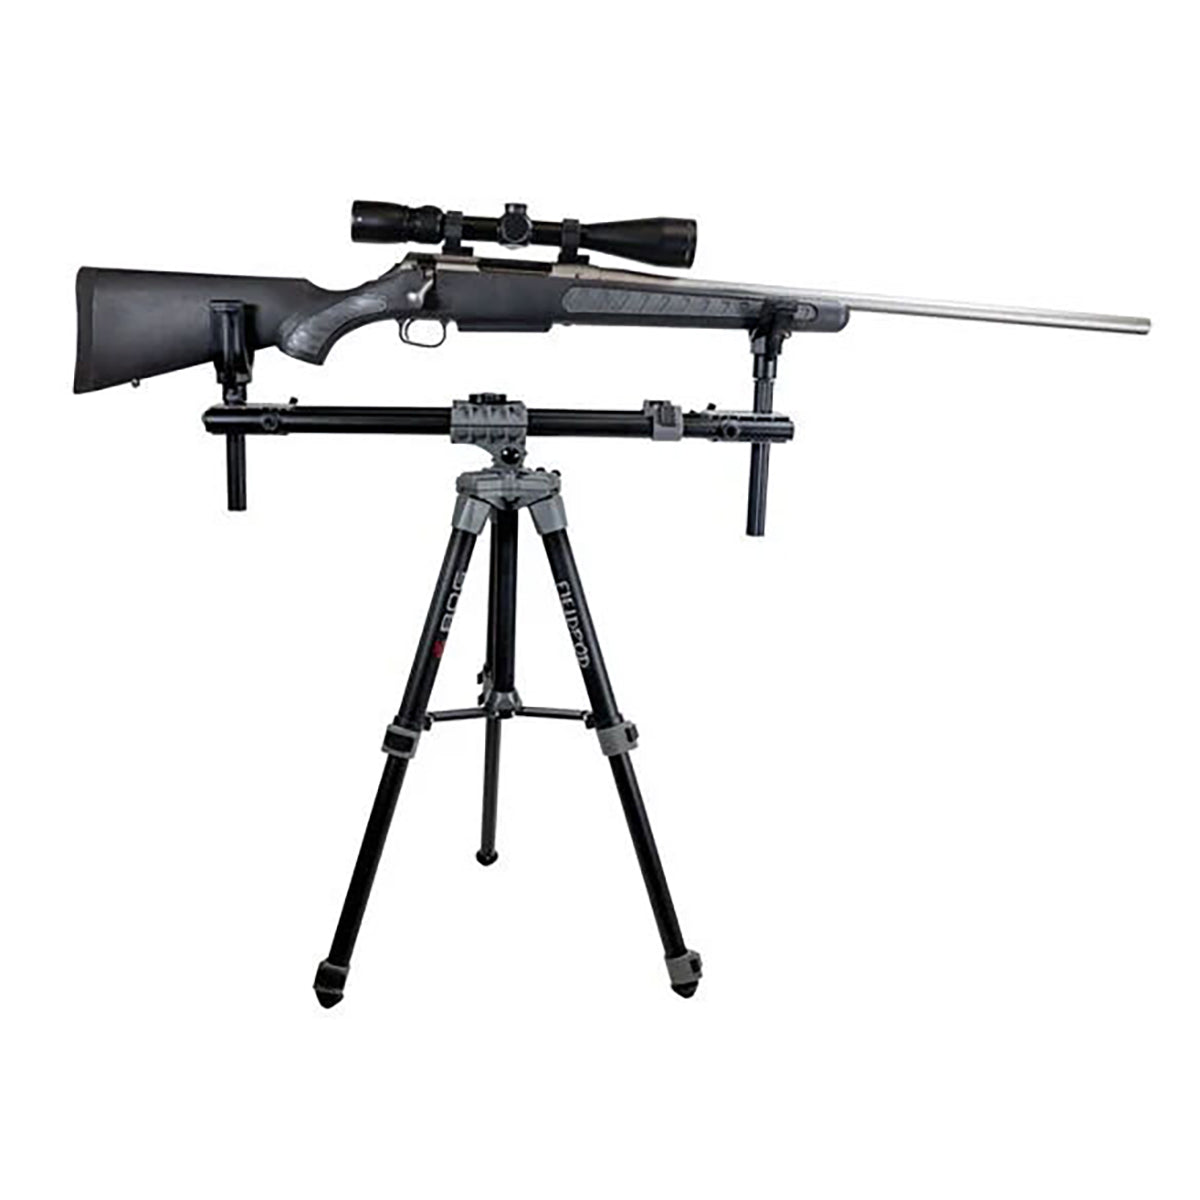 Bog 1100471 FieldPod Magnum Adjustable Ambidextrous Hunting Shooting Tripod